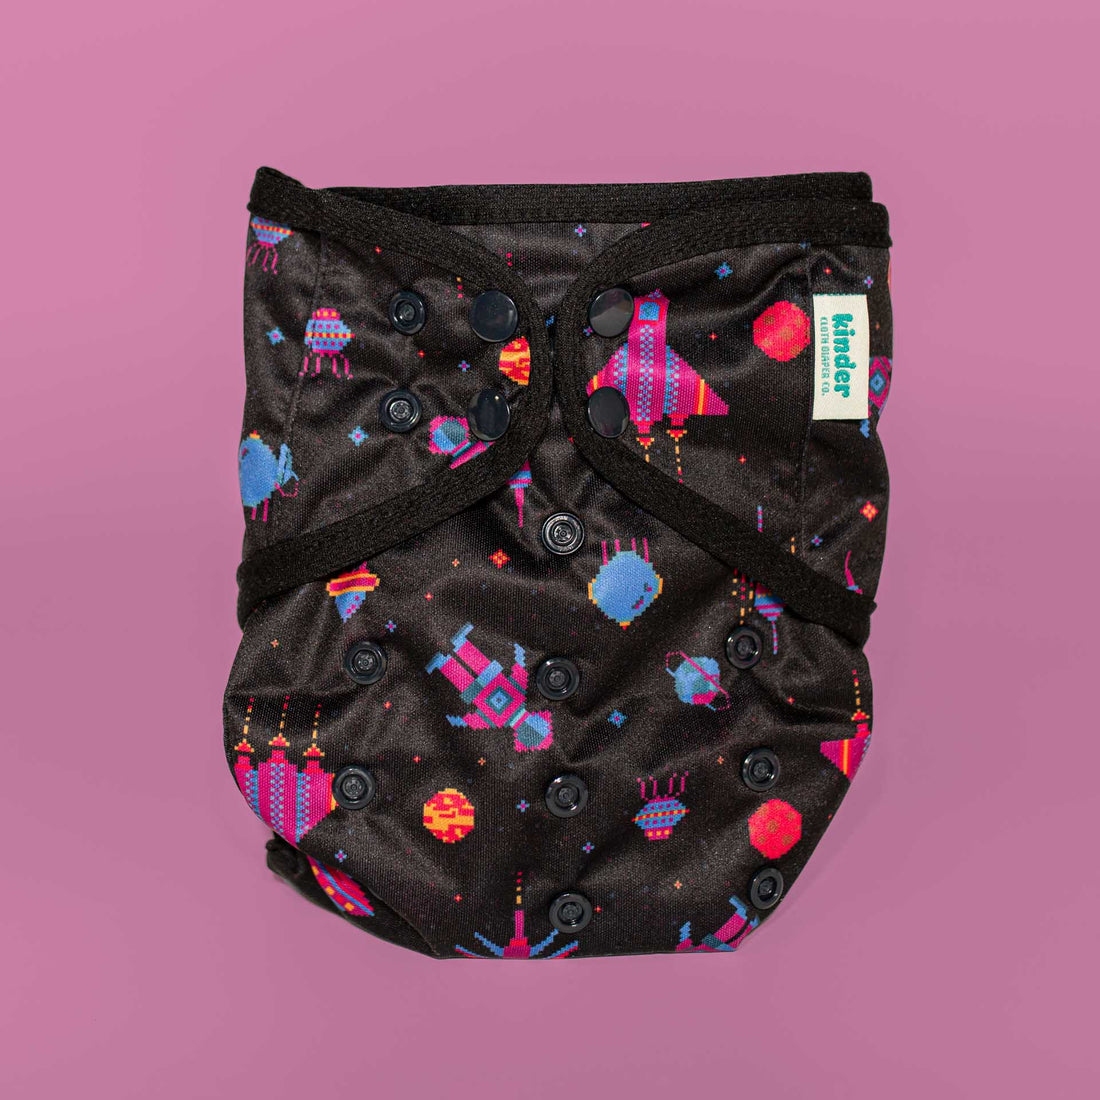 EZ Moms 10 Pack Reusable Diaper Covers for Boys Soft Rubber